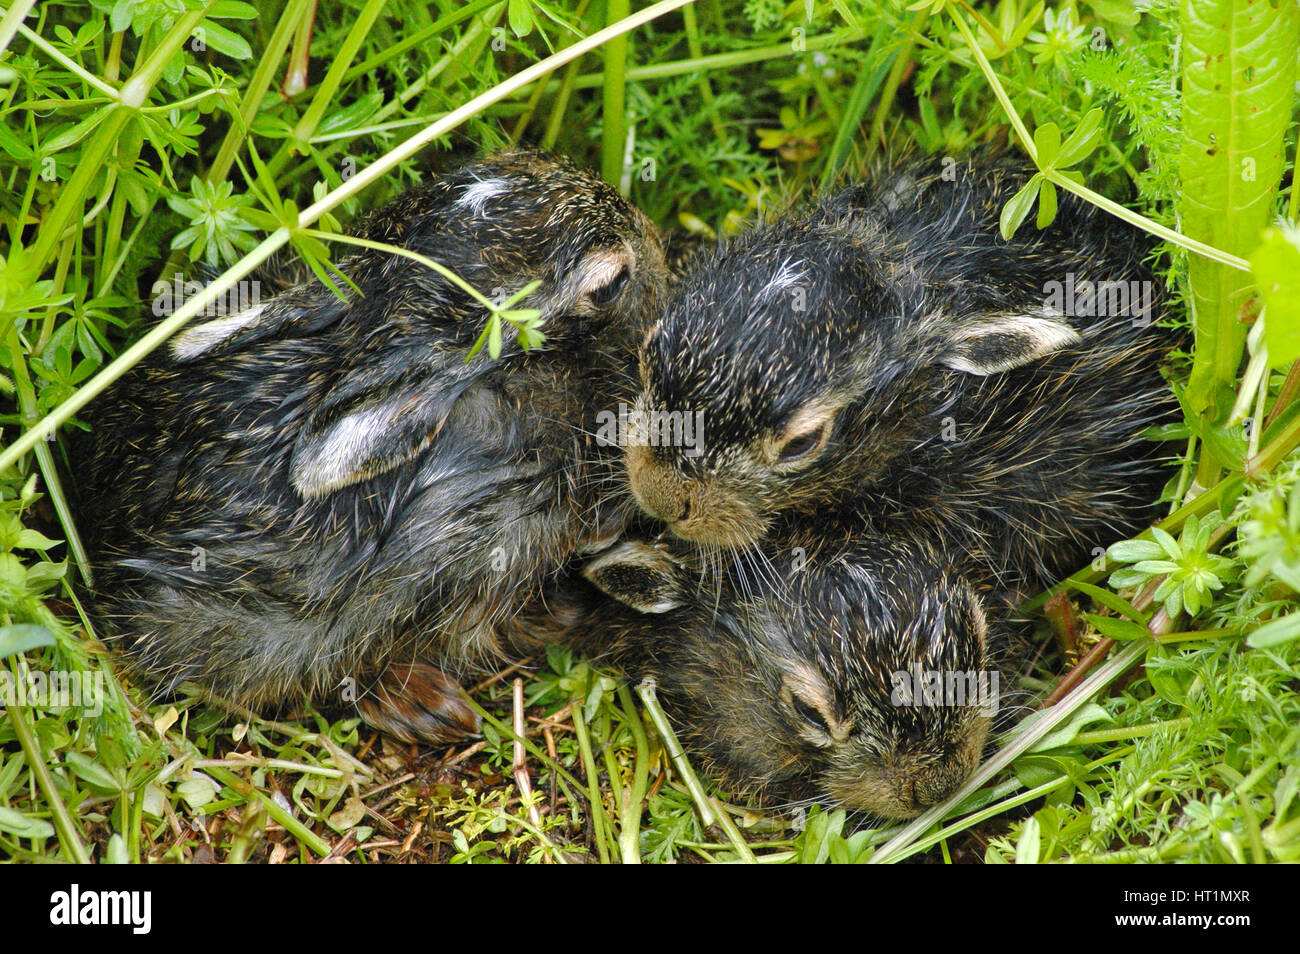 Newborn Baby Rabbits In The Grass Stock Photo Alamy